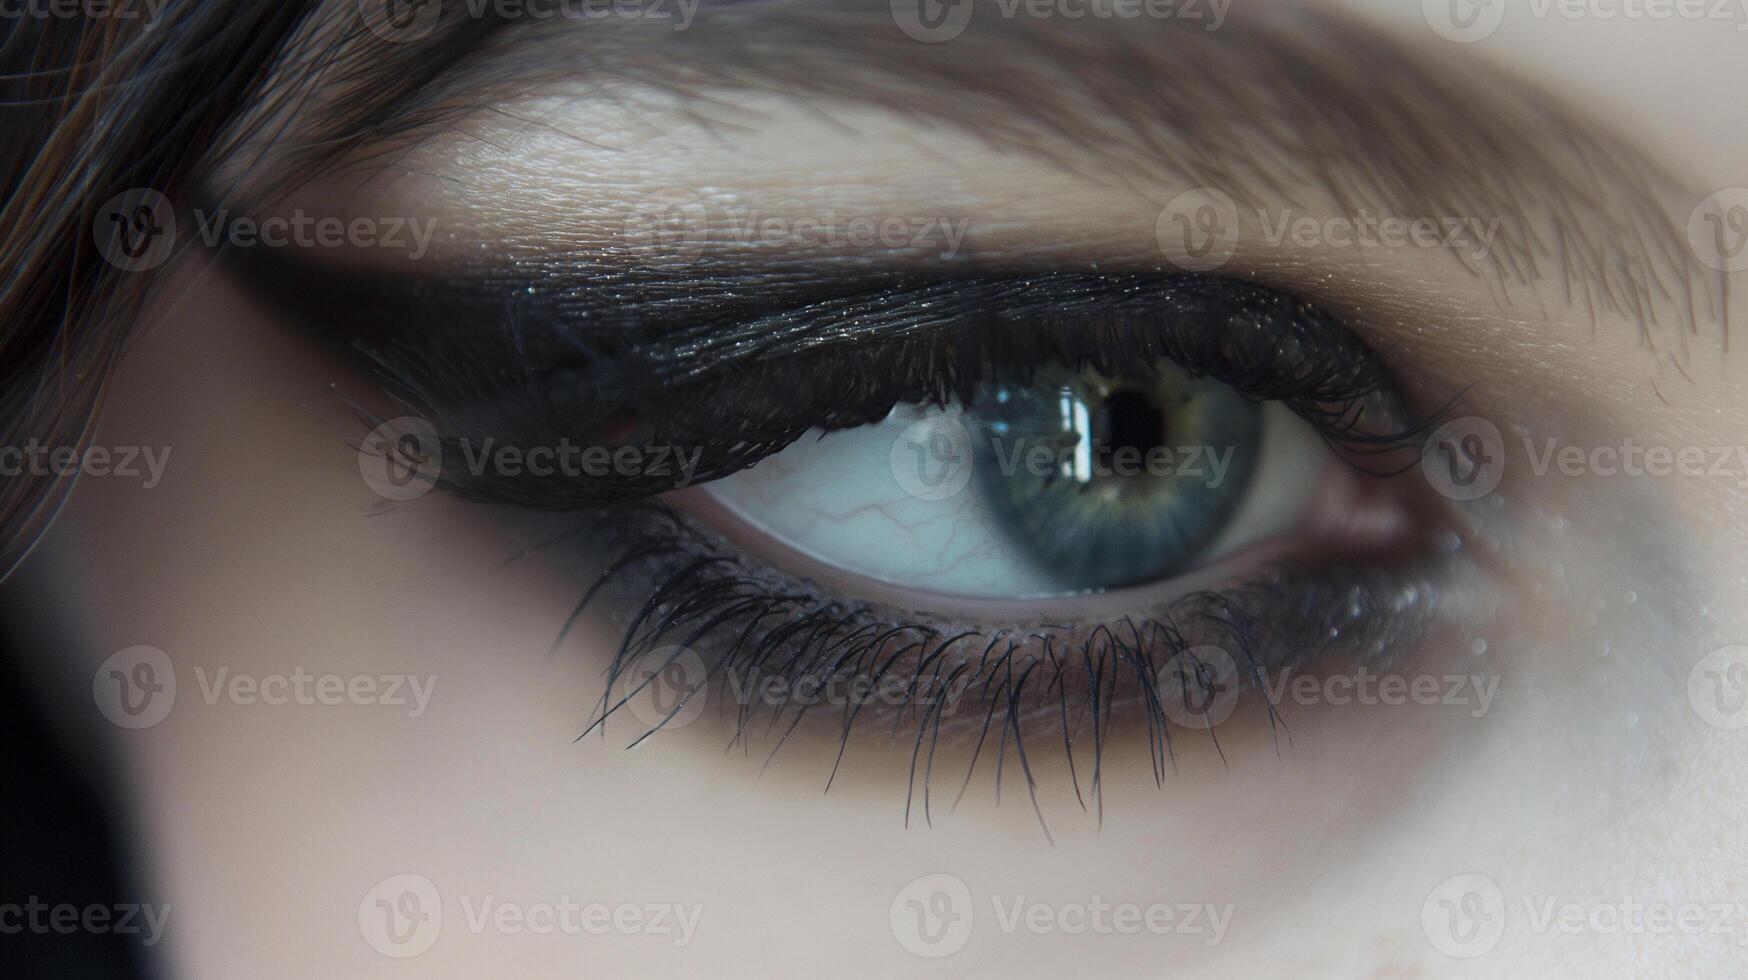 bold black smoky eye of a woman in focus. Eye make-up concept photo